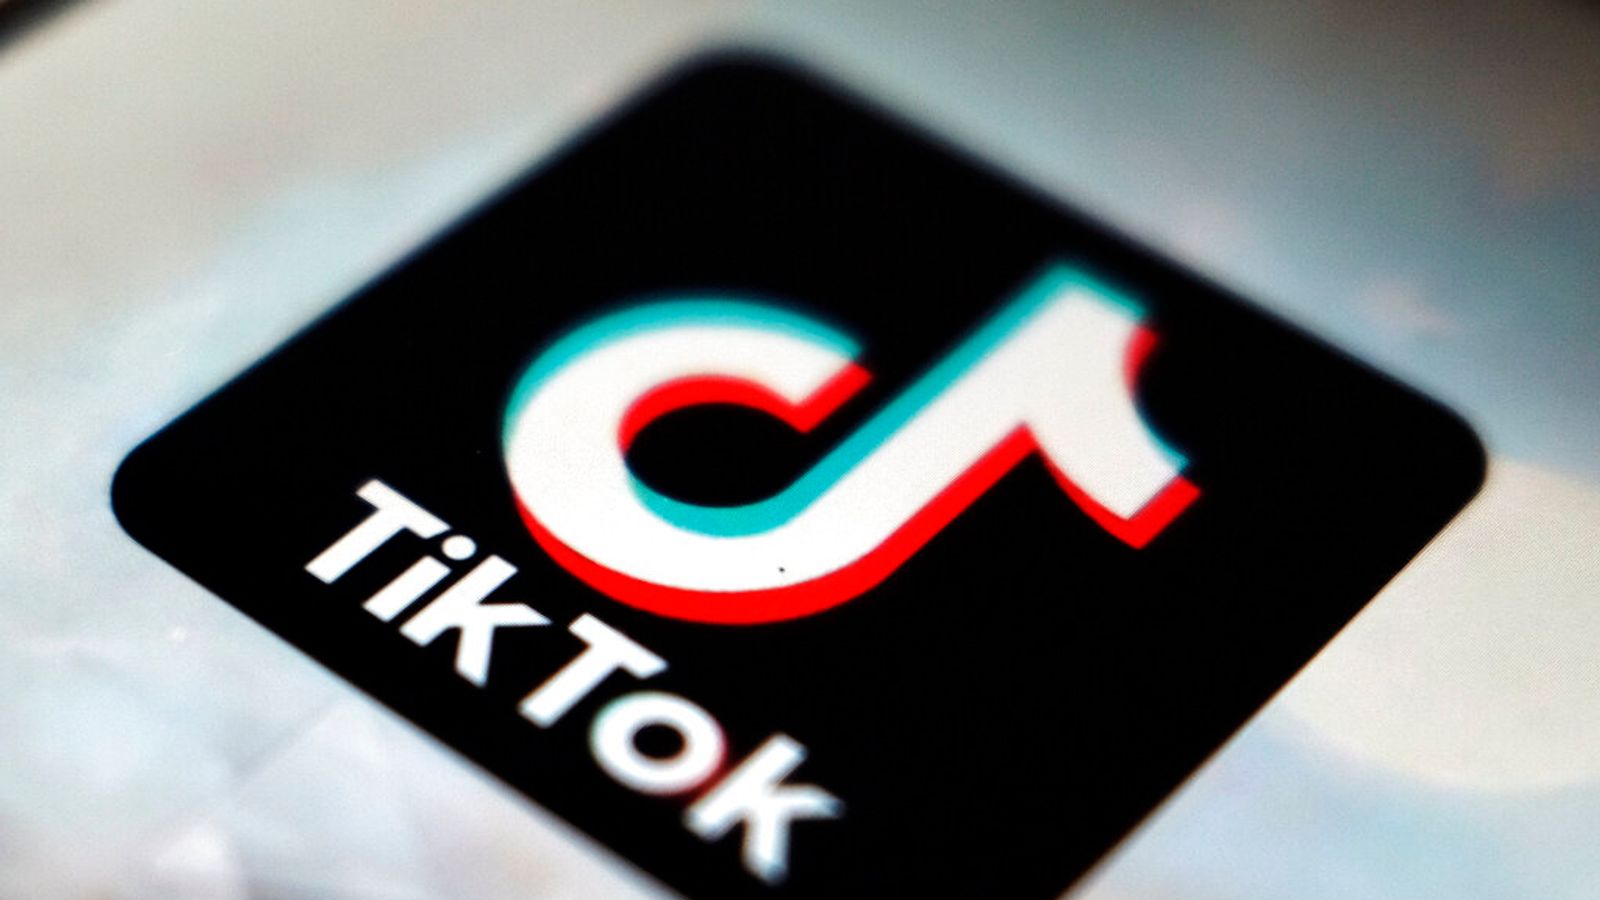 Calls for an outright ban on TikTok are not straightforward, despite data concerns